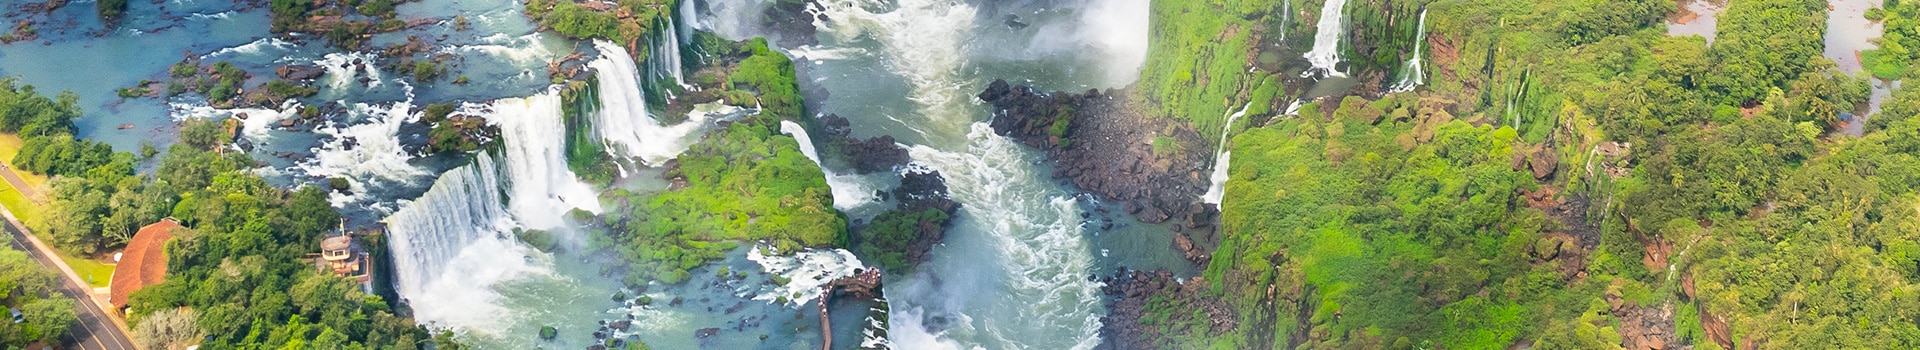 São paulo - Iguassu falls-cataratas